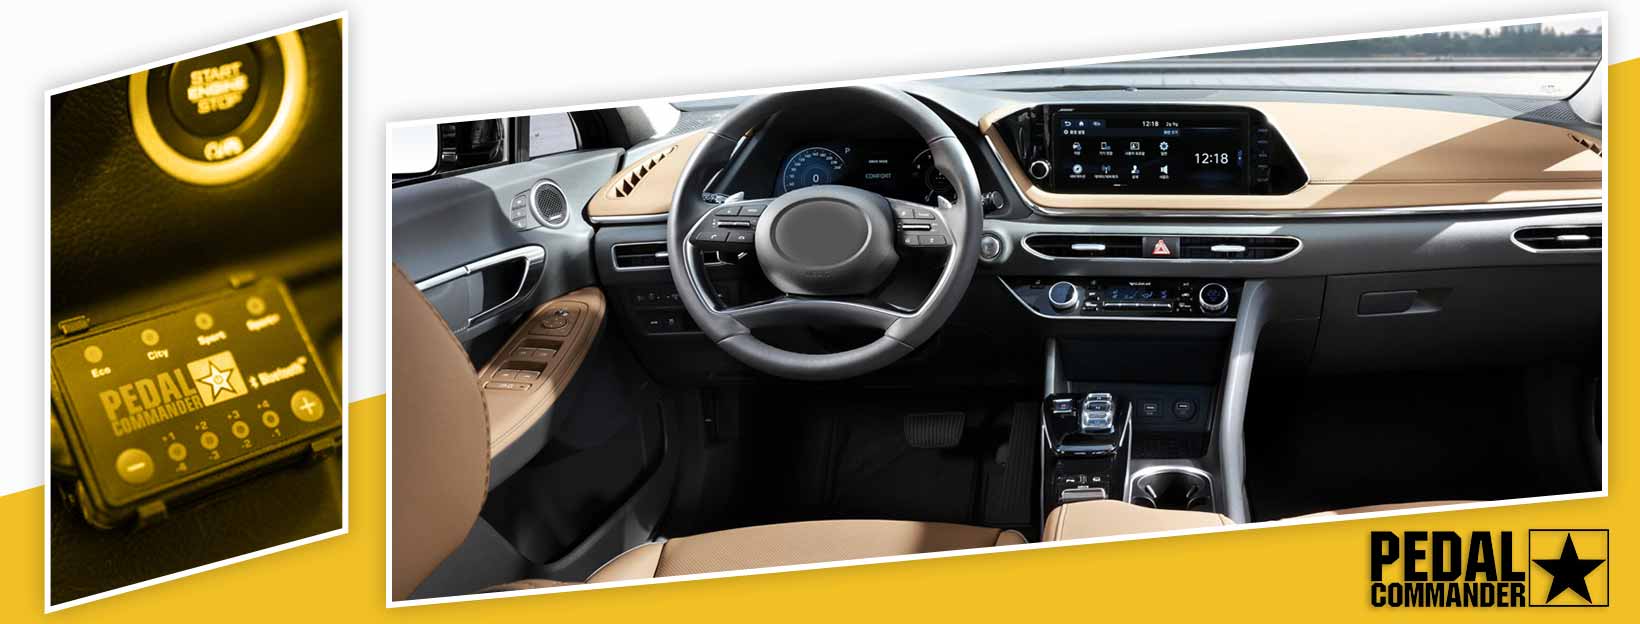 Pedal Commander for Hyundai Sonata - interior